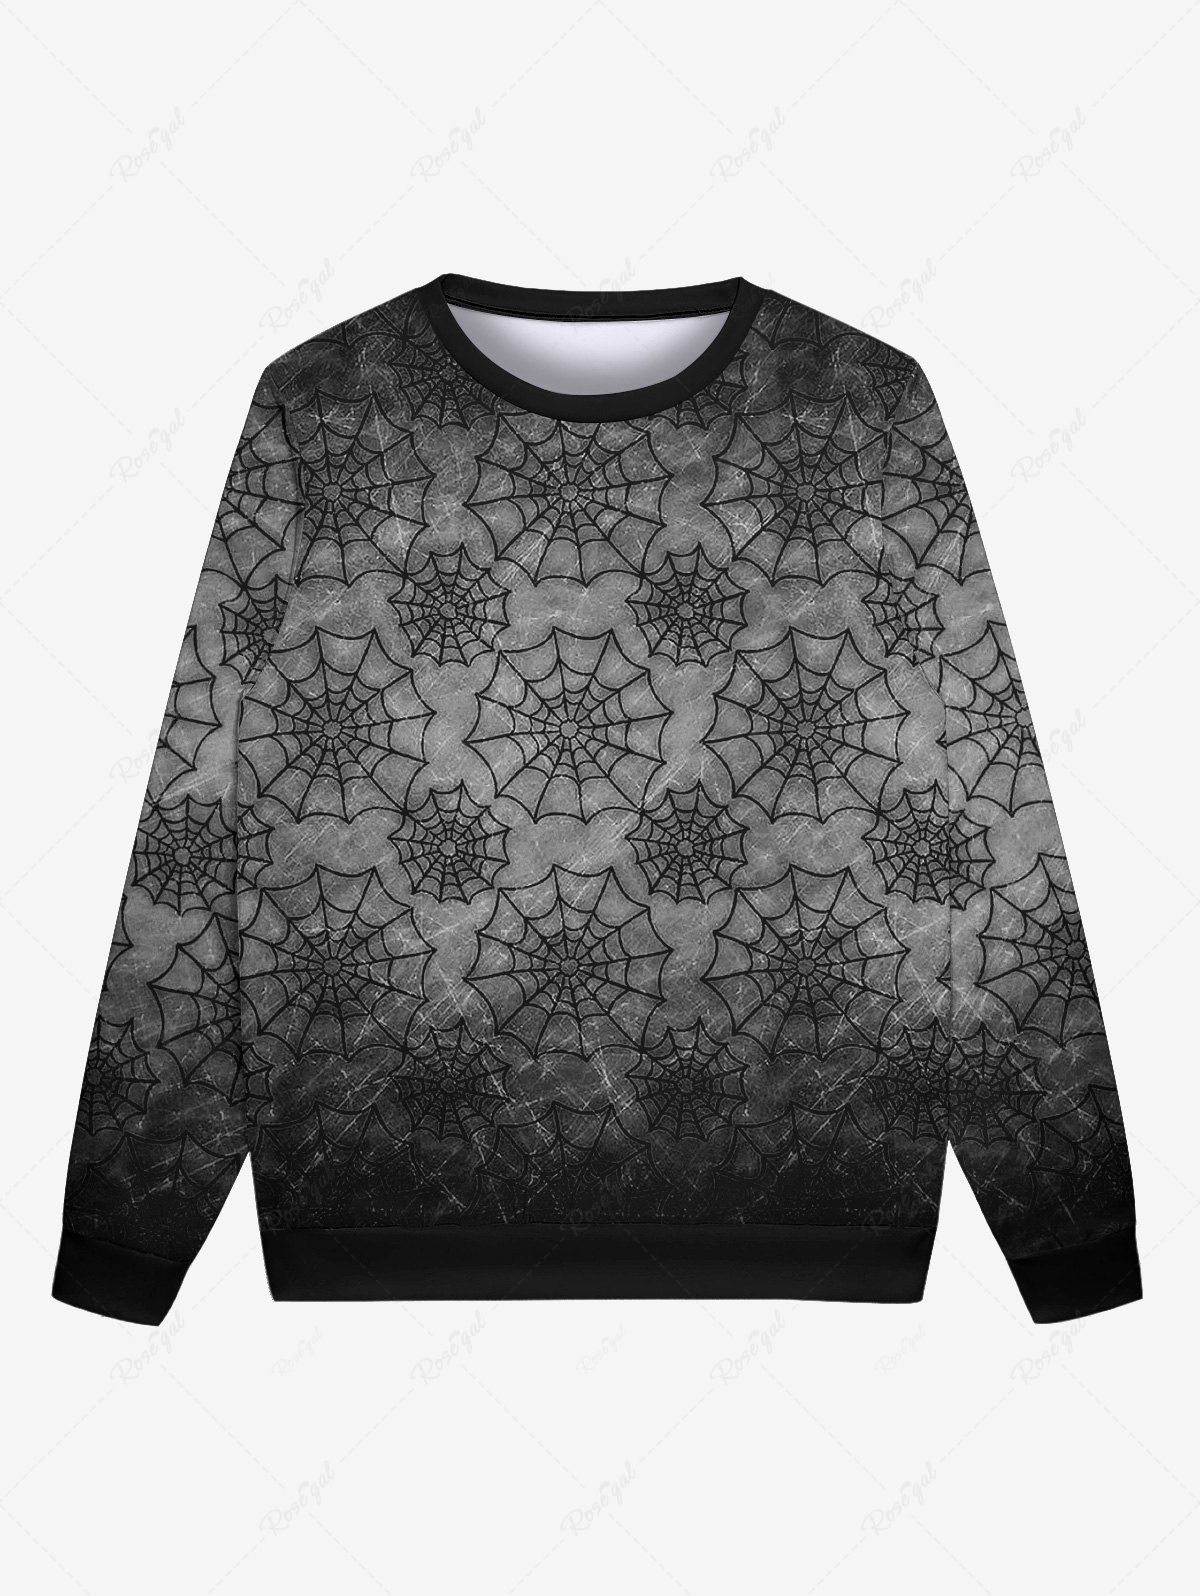 Hot Gothic Halloween Spider Web Print Sweatshirt For Men  